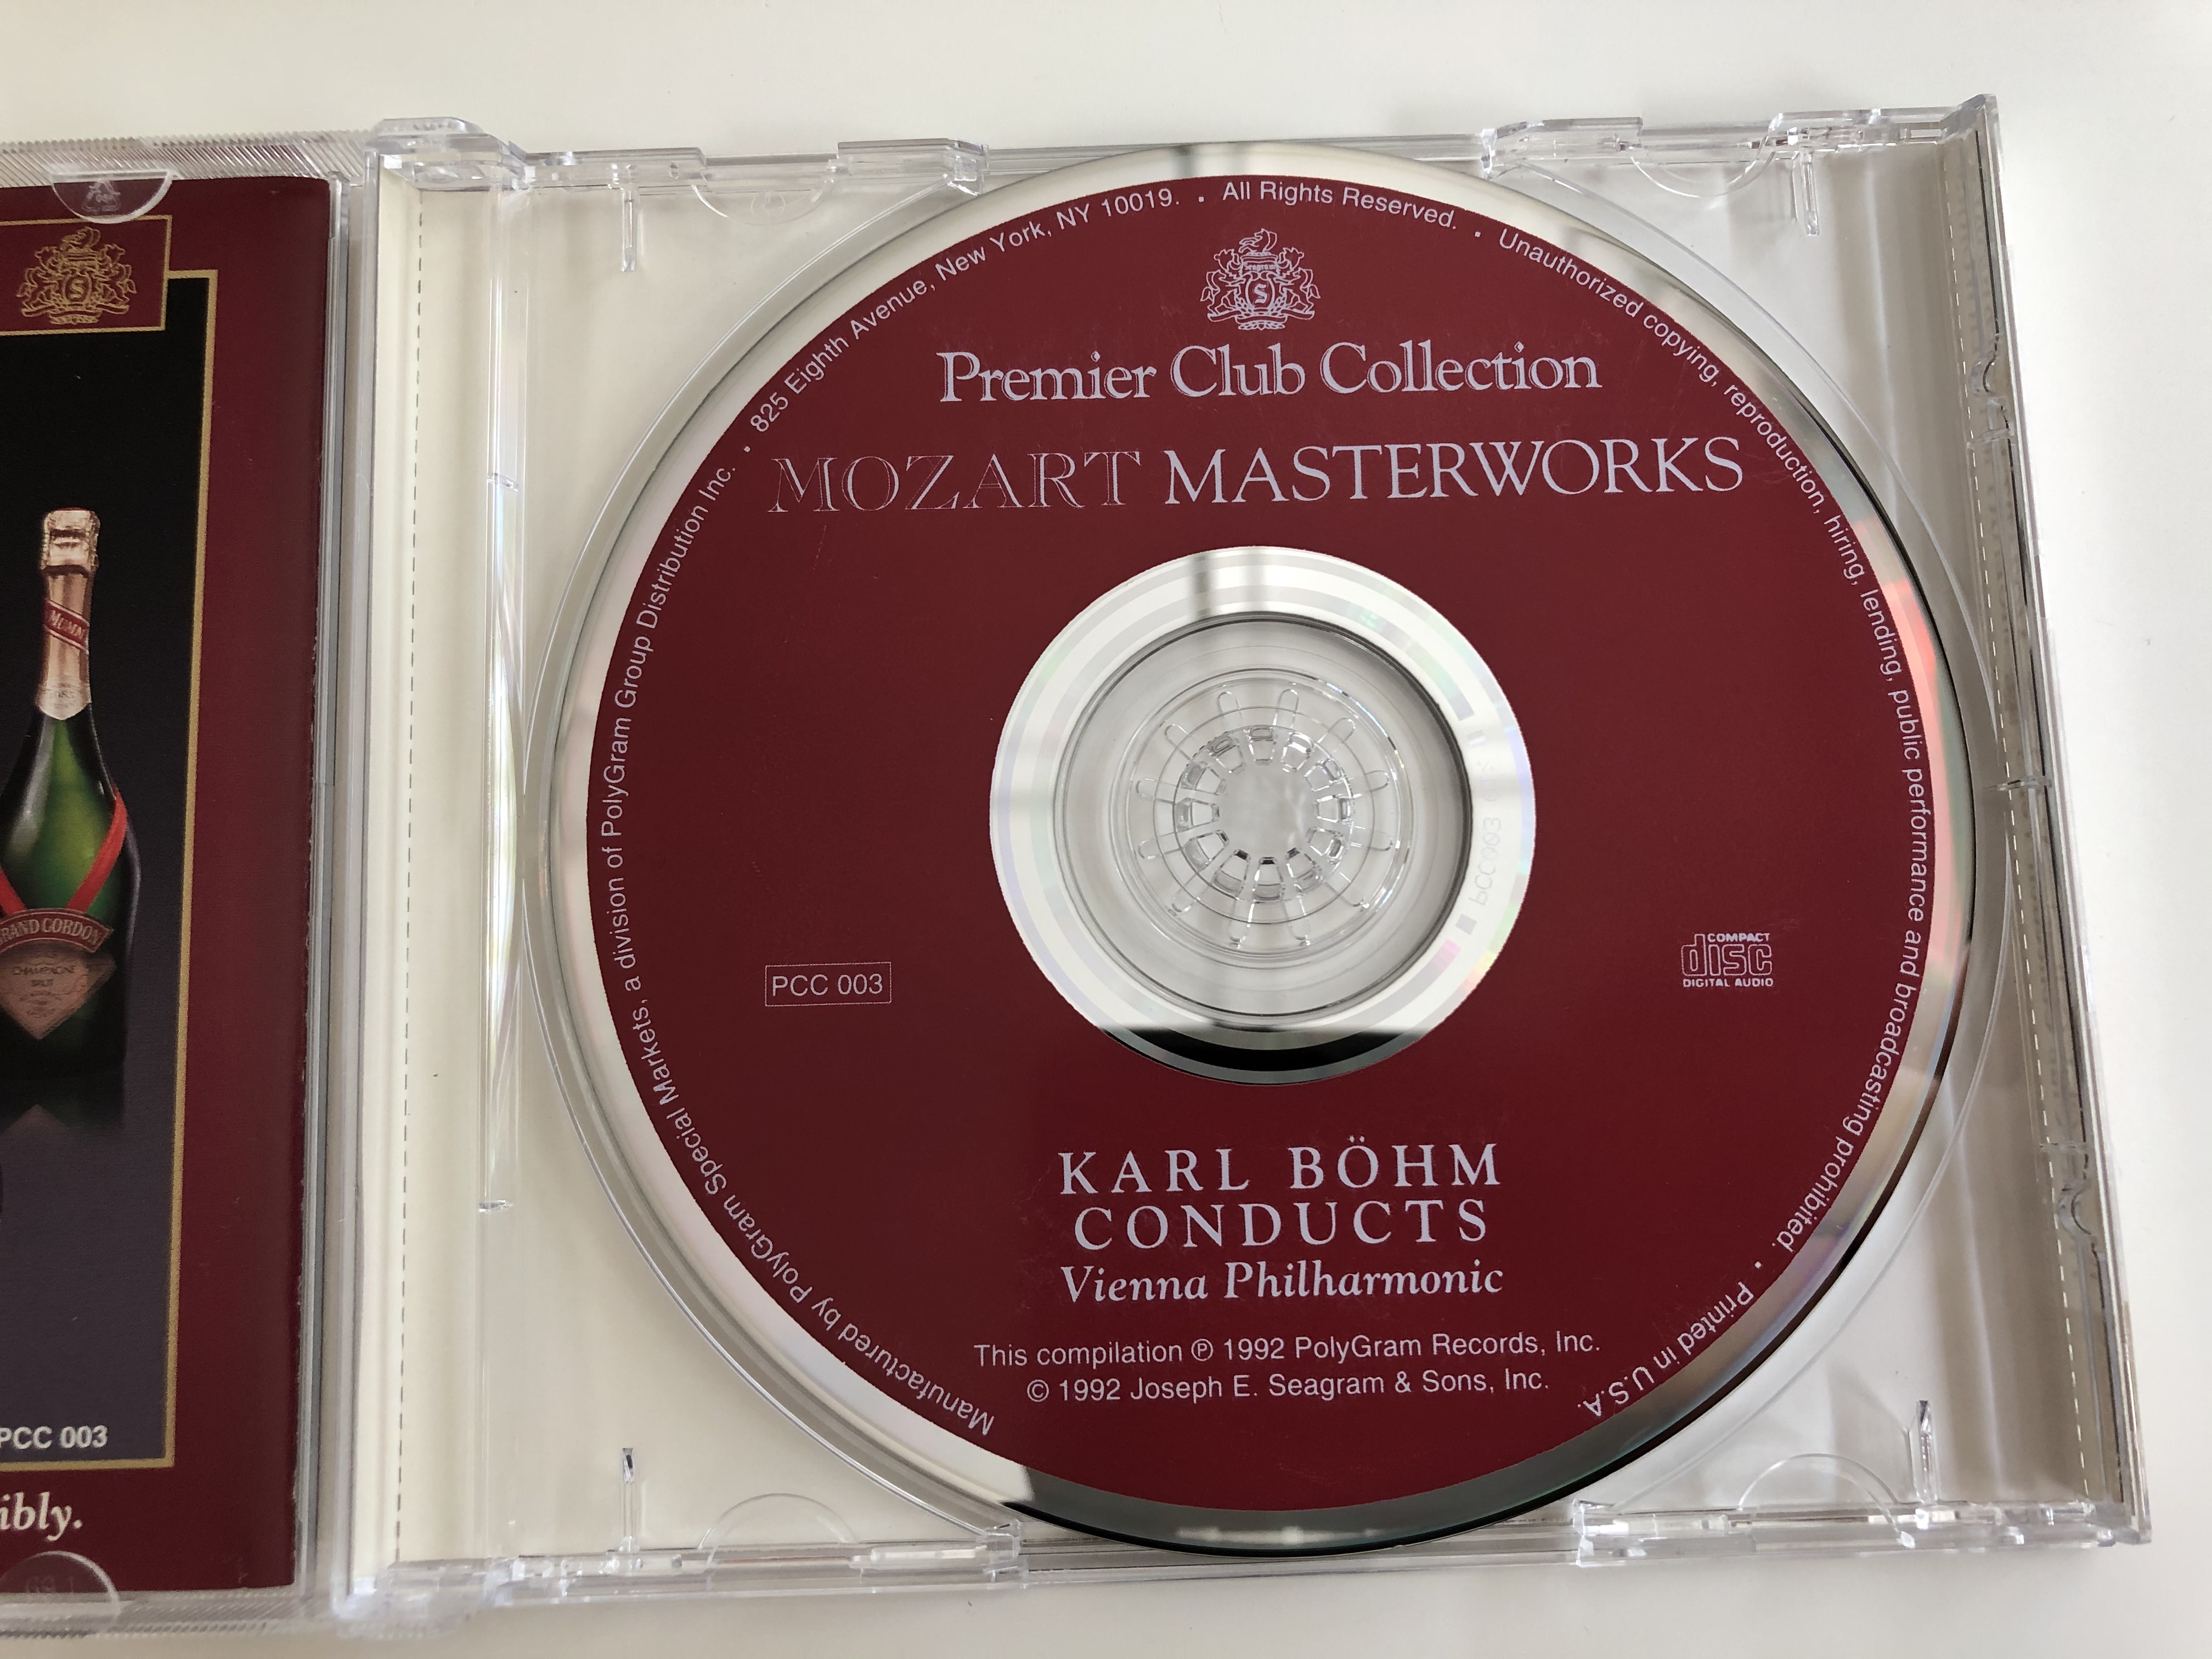 mozart-masterworks-limited-edition-vol.3-conducted-karl-bohm-vienna-philharmonic-premier-club-collection-audio-cd-1992-pcc-003-5-.jpg